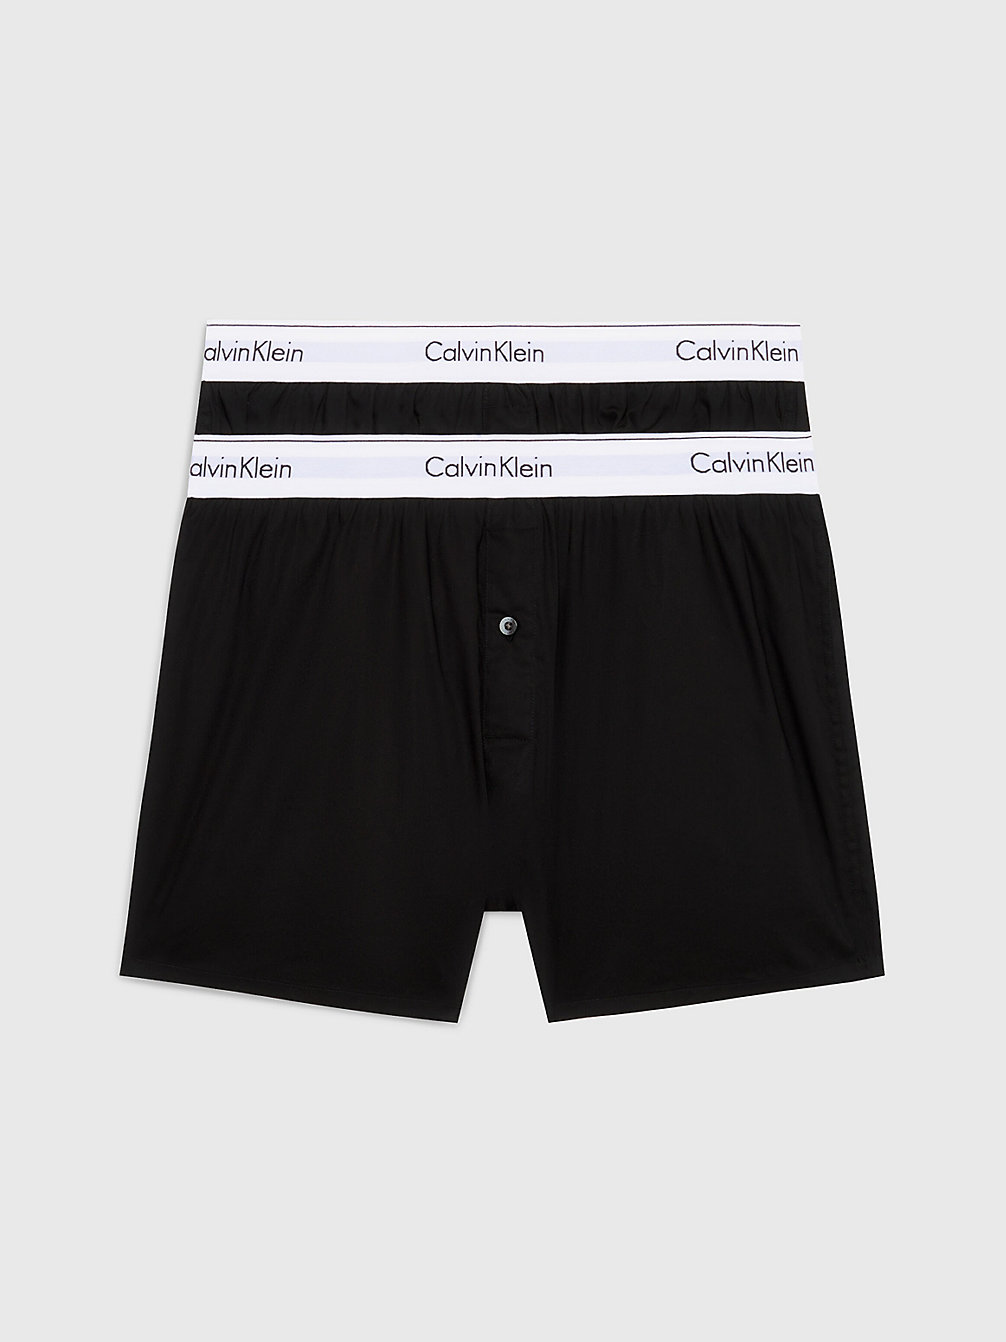 BLACK/ BLACK 2 Pack Slim Fit Boxers - Modern Cotton undefined men Calvin Klein